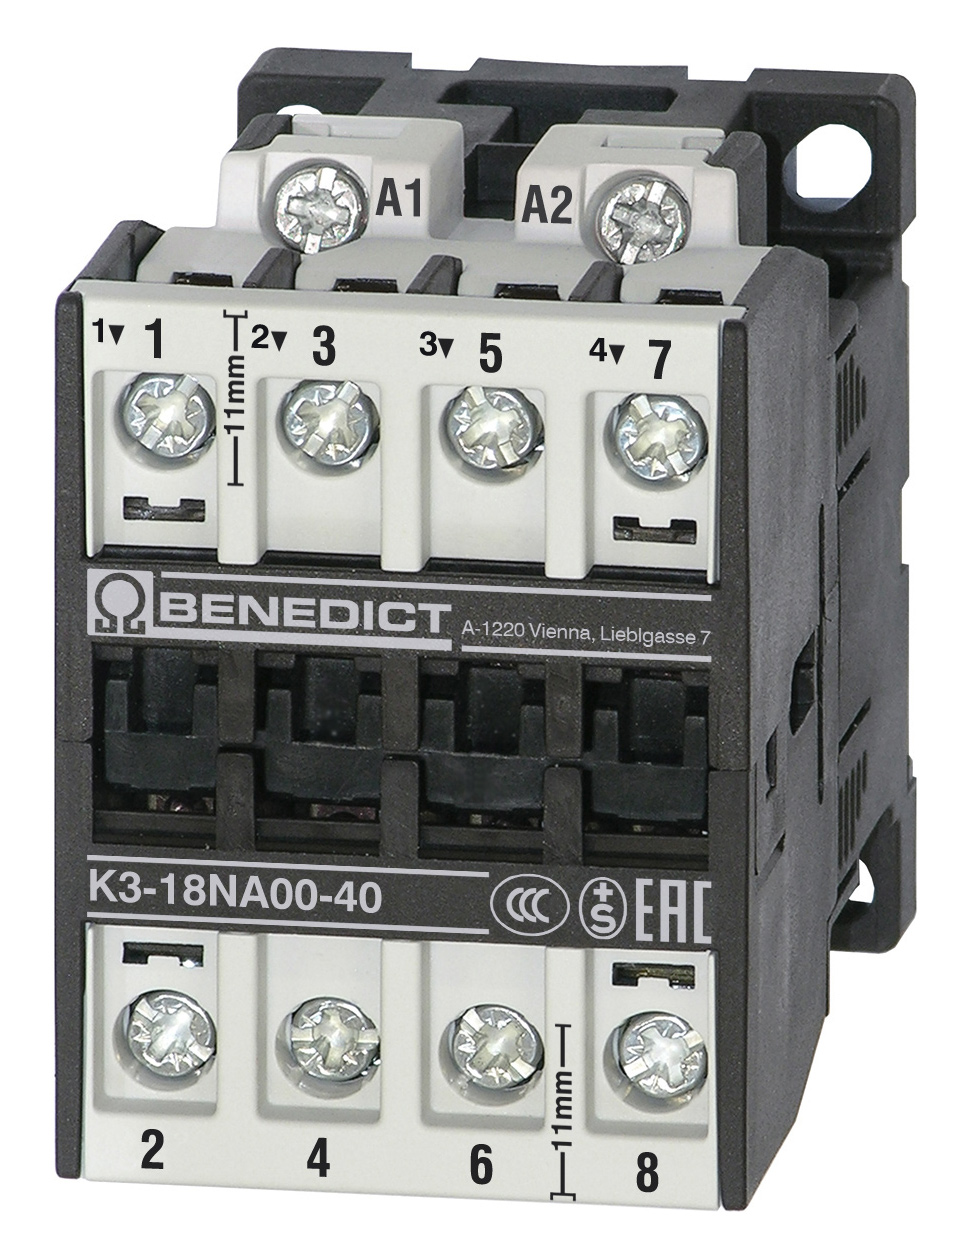  K3-18NA00-40 24 BENEDICT